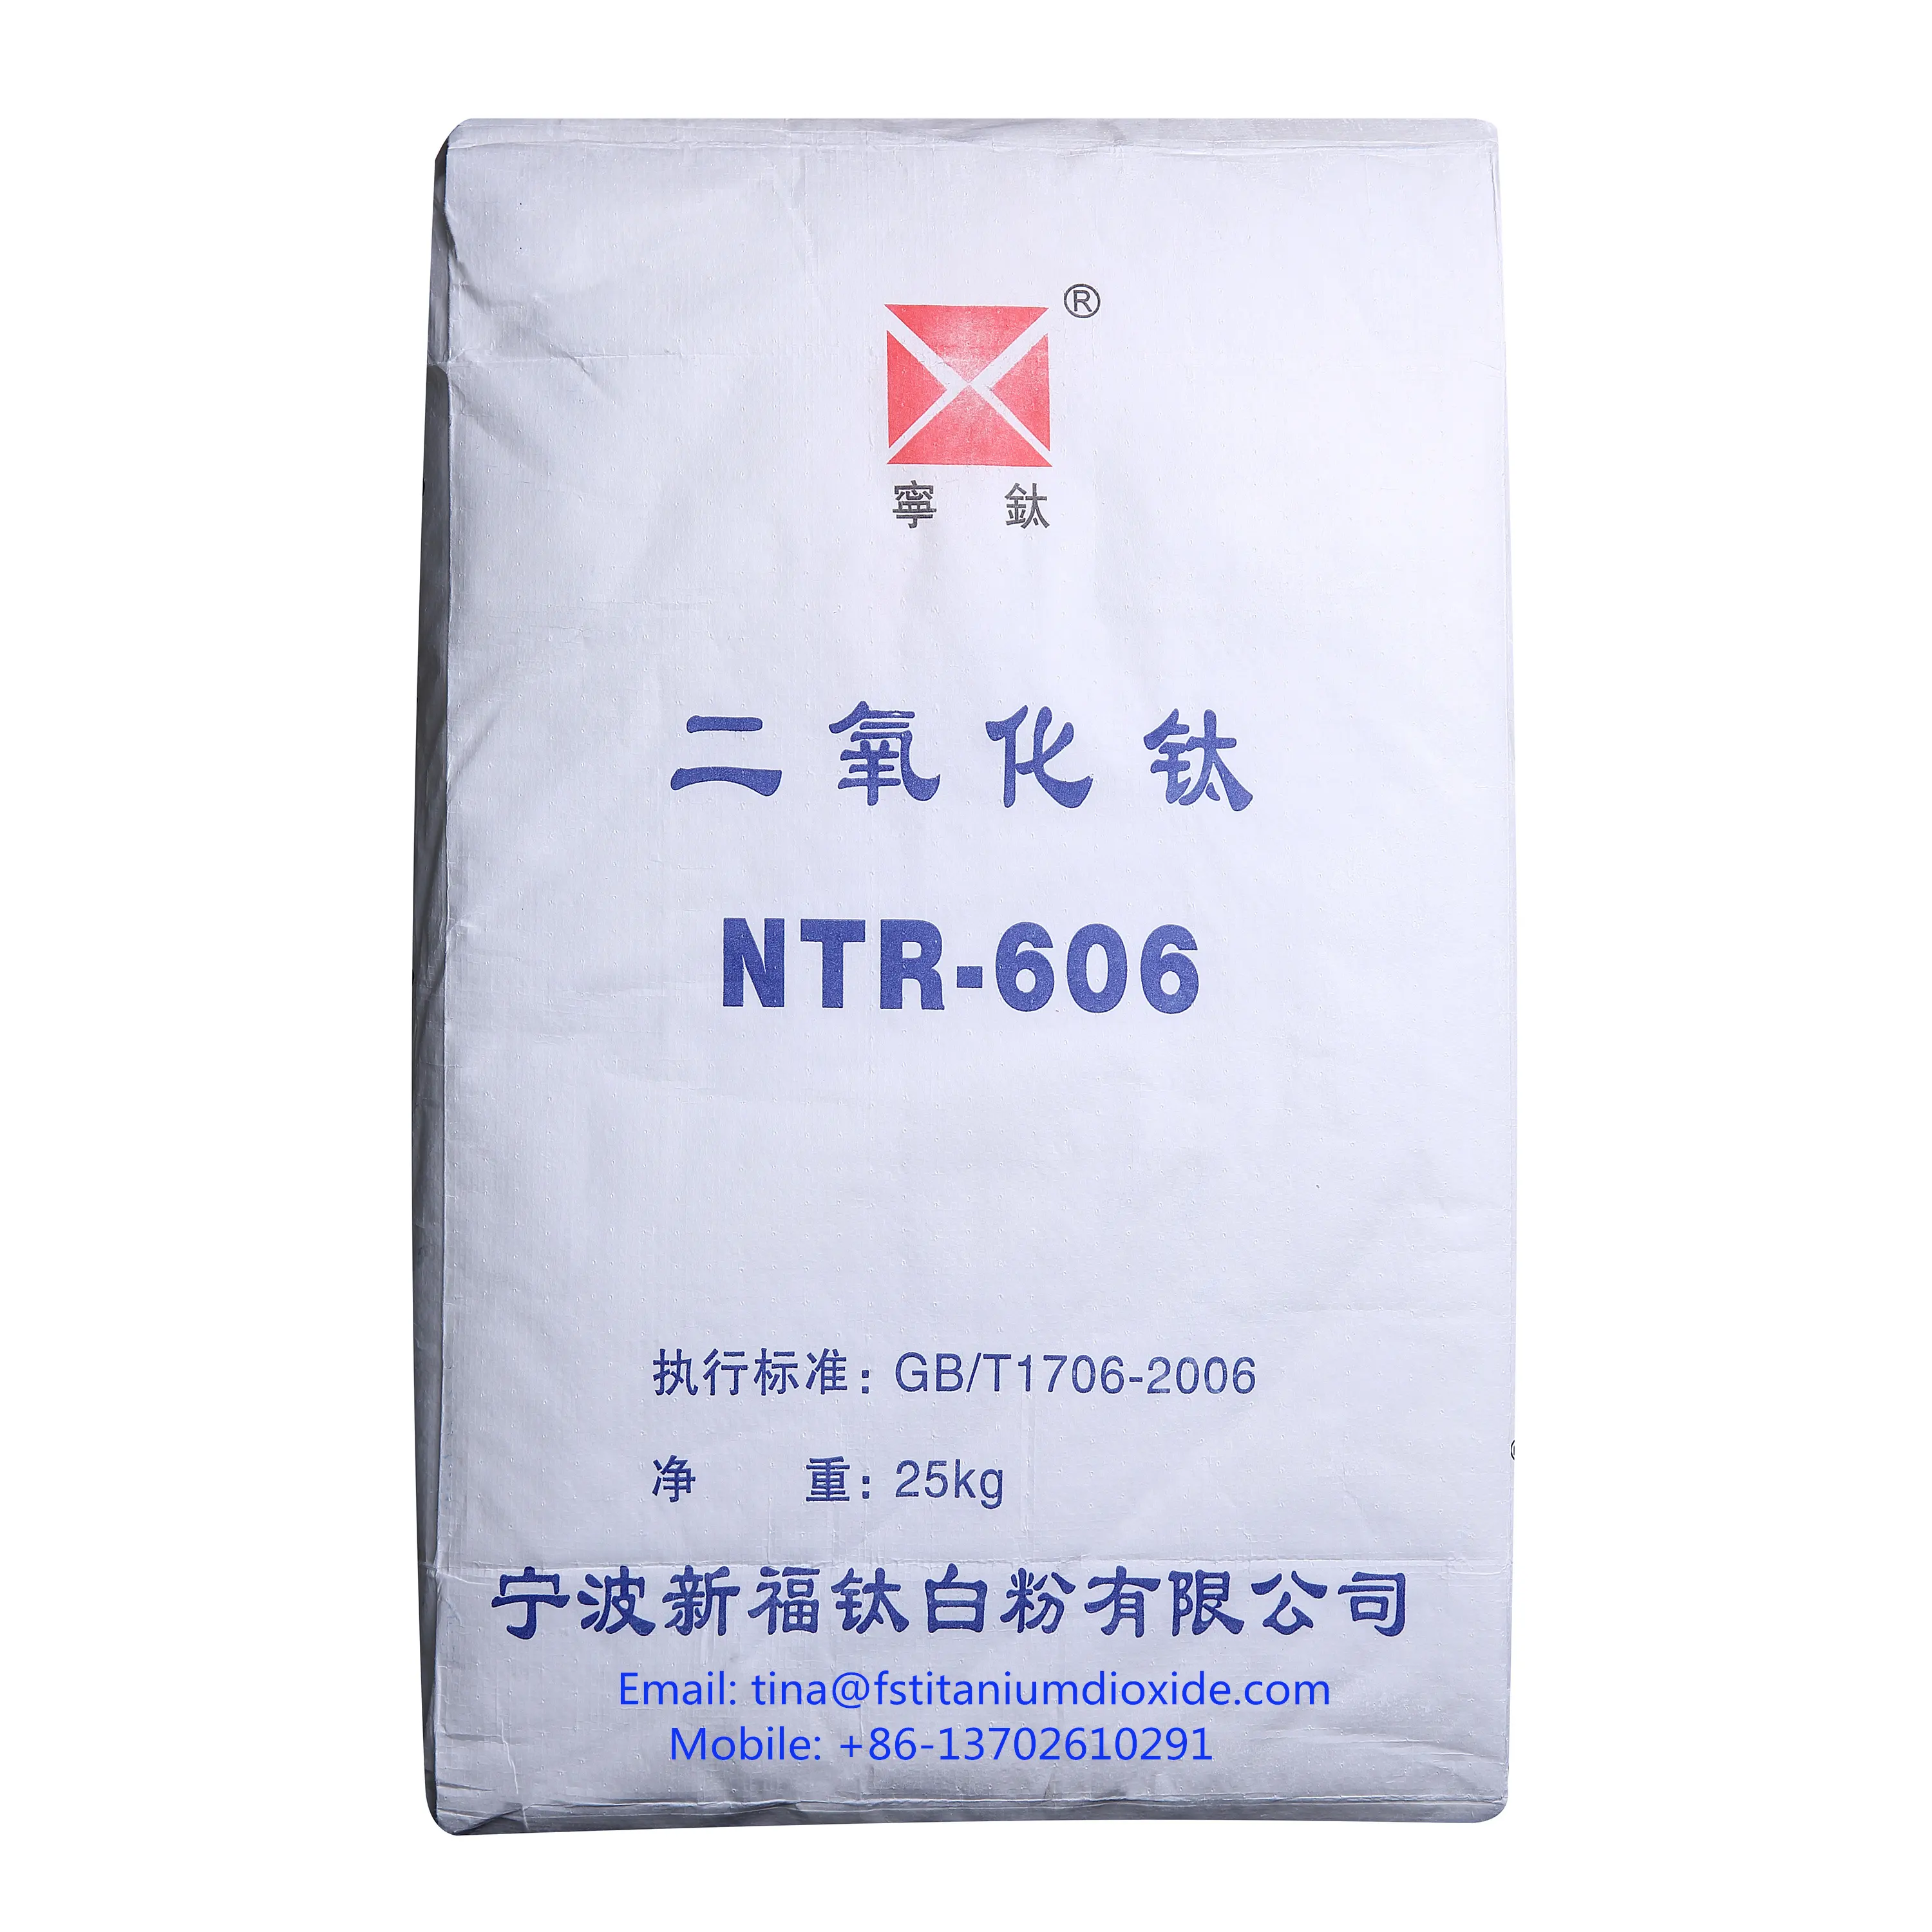 NTR-606 titaandioxide rutiel, titaandioxide rutiel, titaandioxide prijs